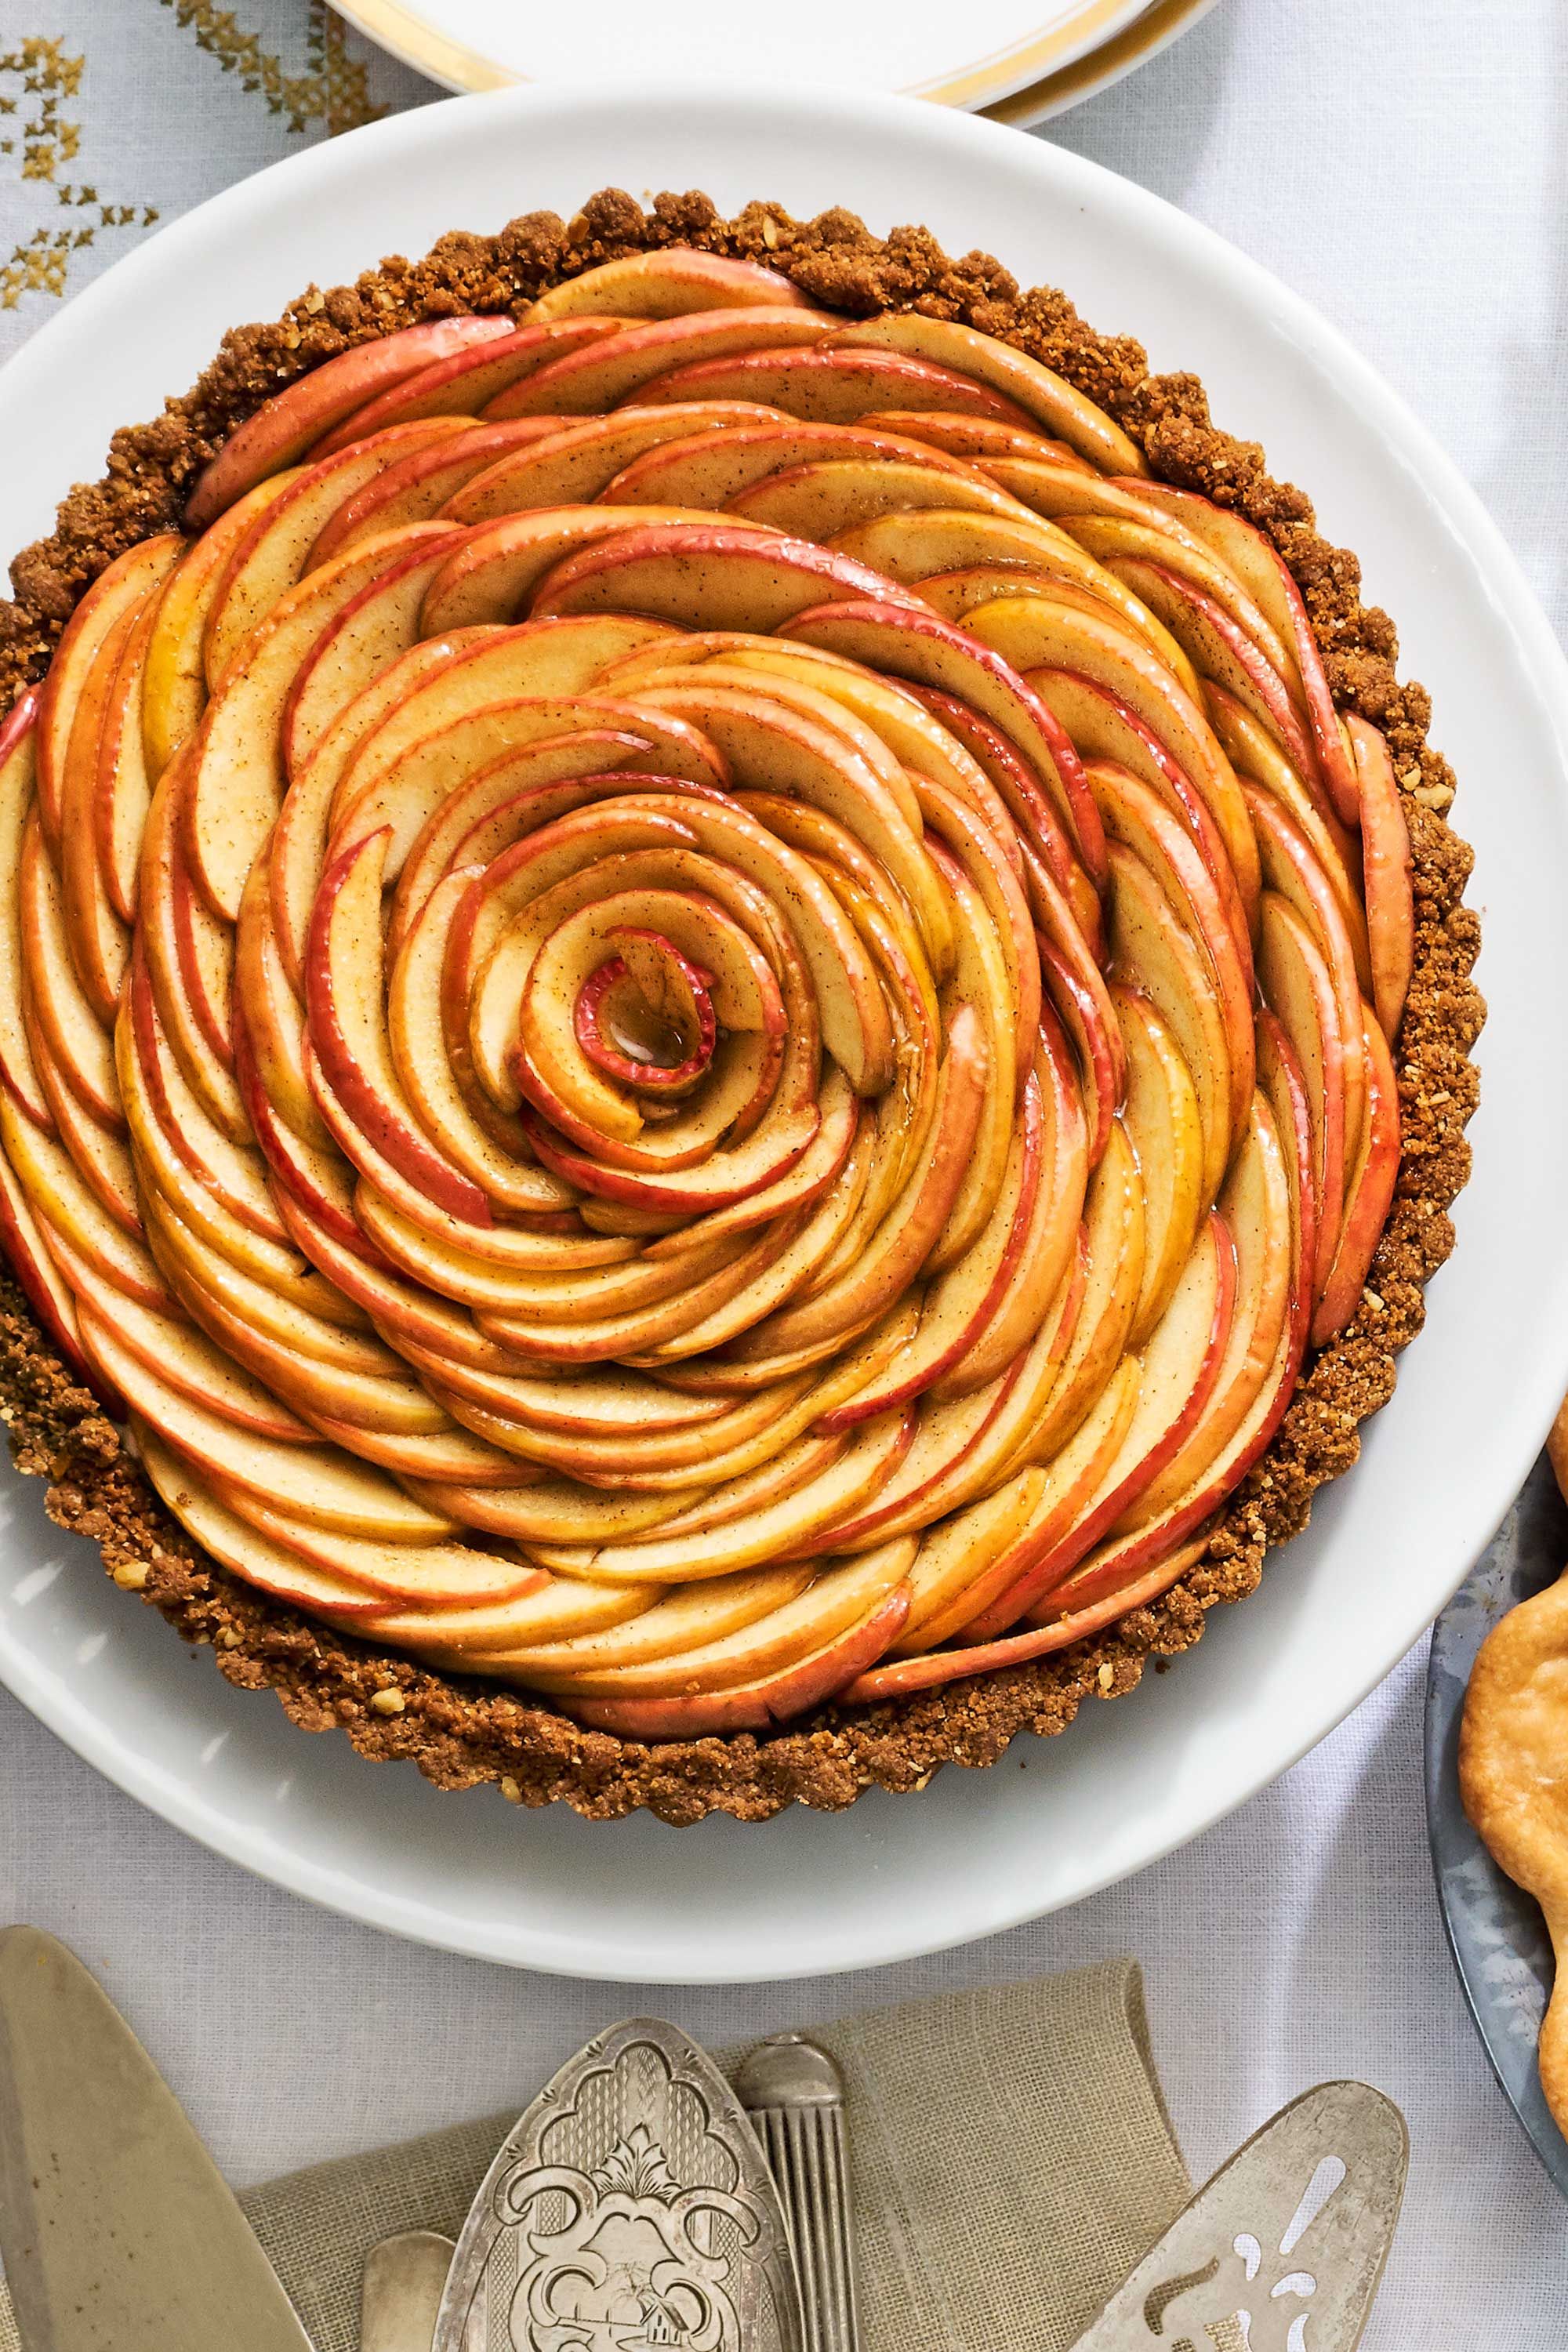 Best Apple Blossom Tart Recipe - How To Make an Apple Blossom Tart -  CountryLiving.com